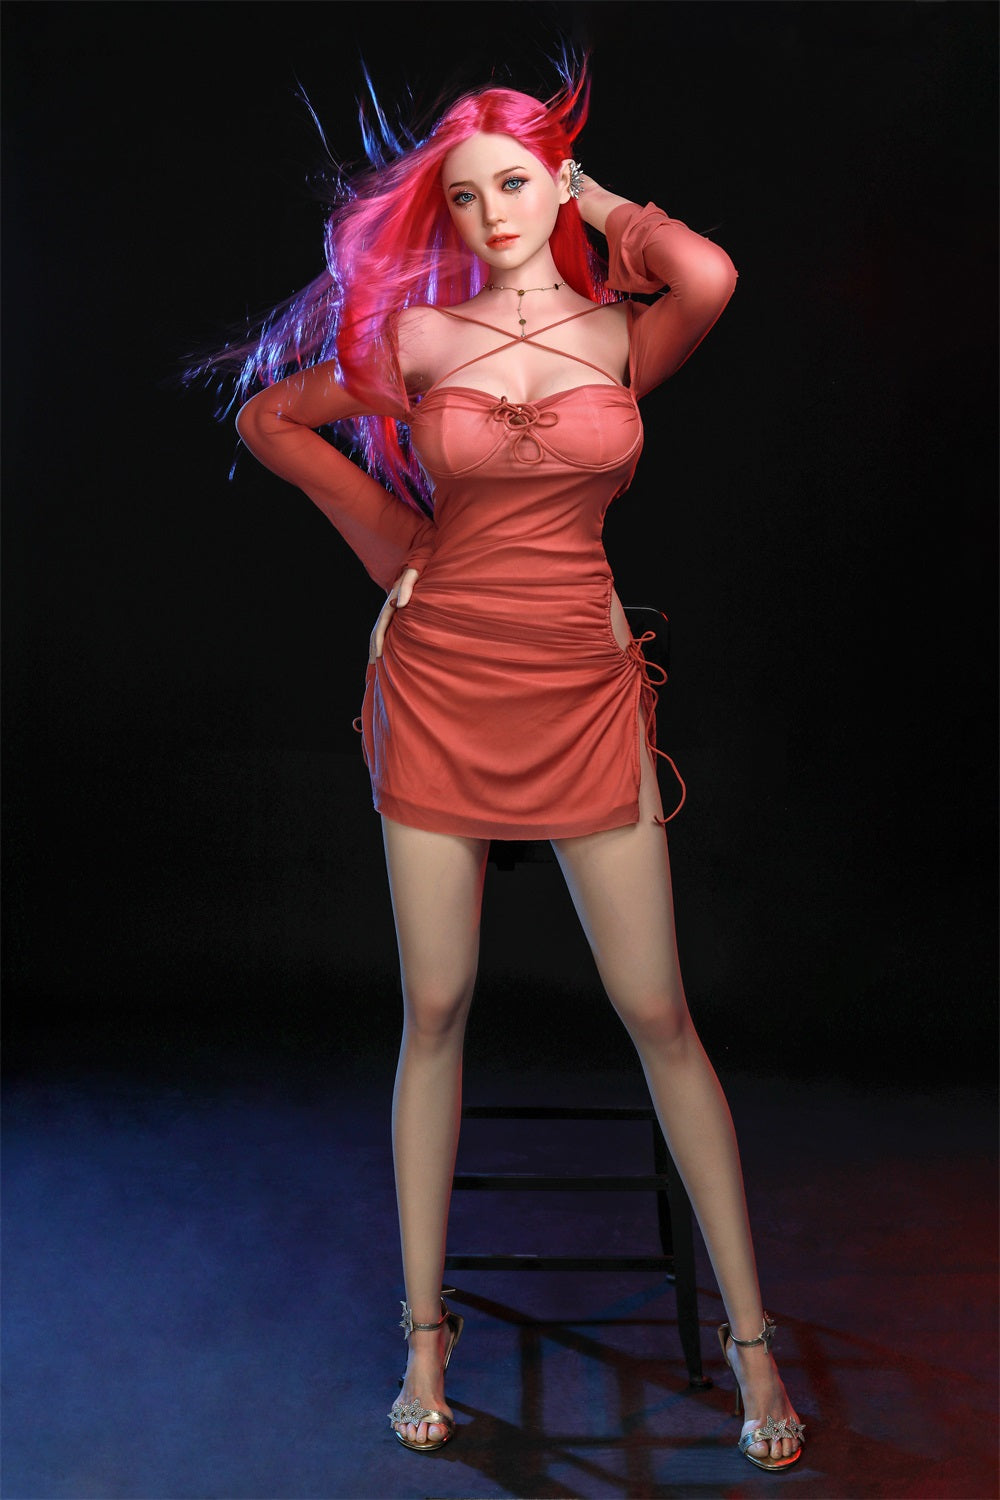 168cm Femboy sex doll red hair silicone COSDoll